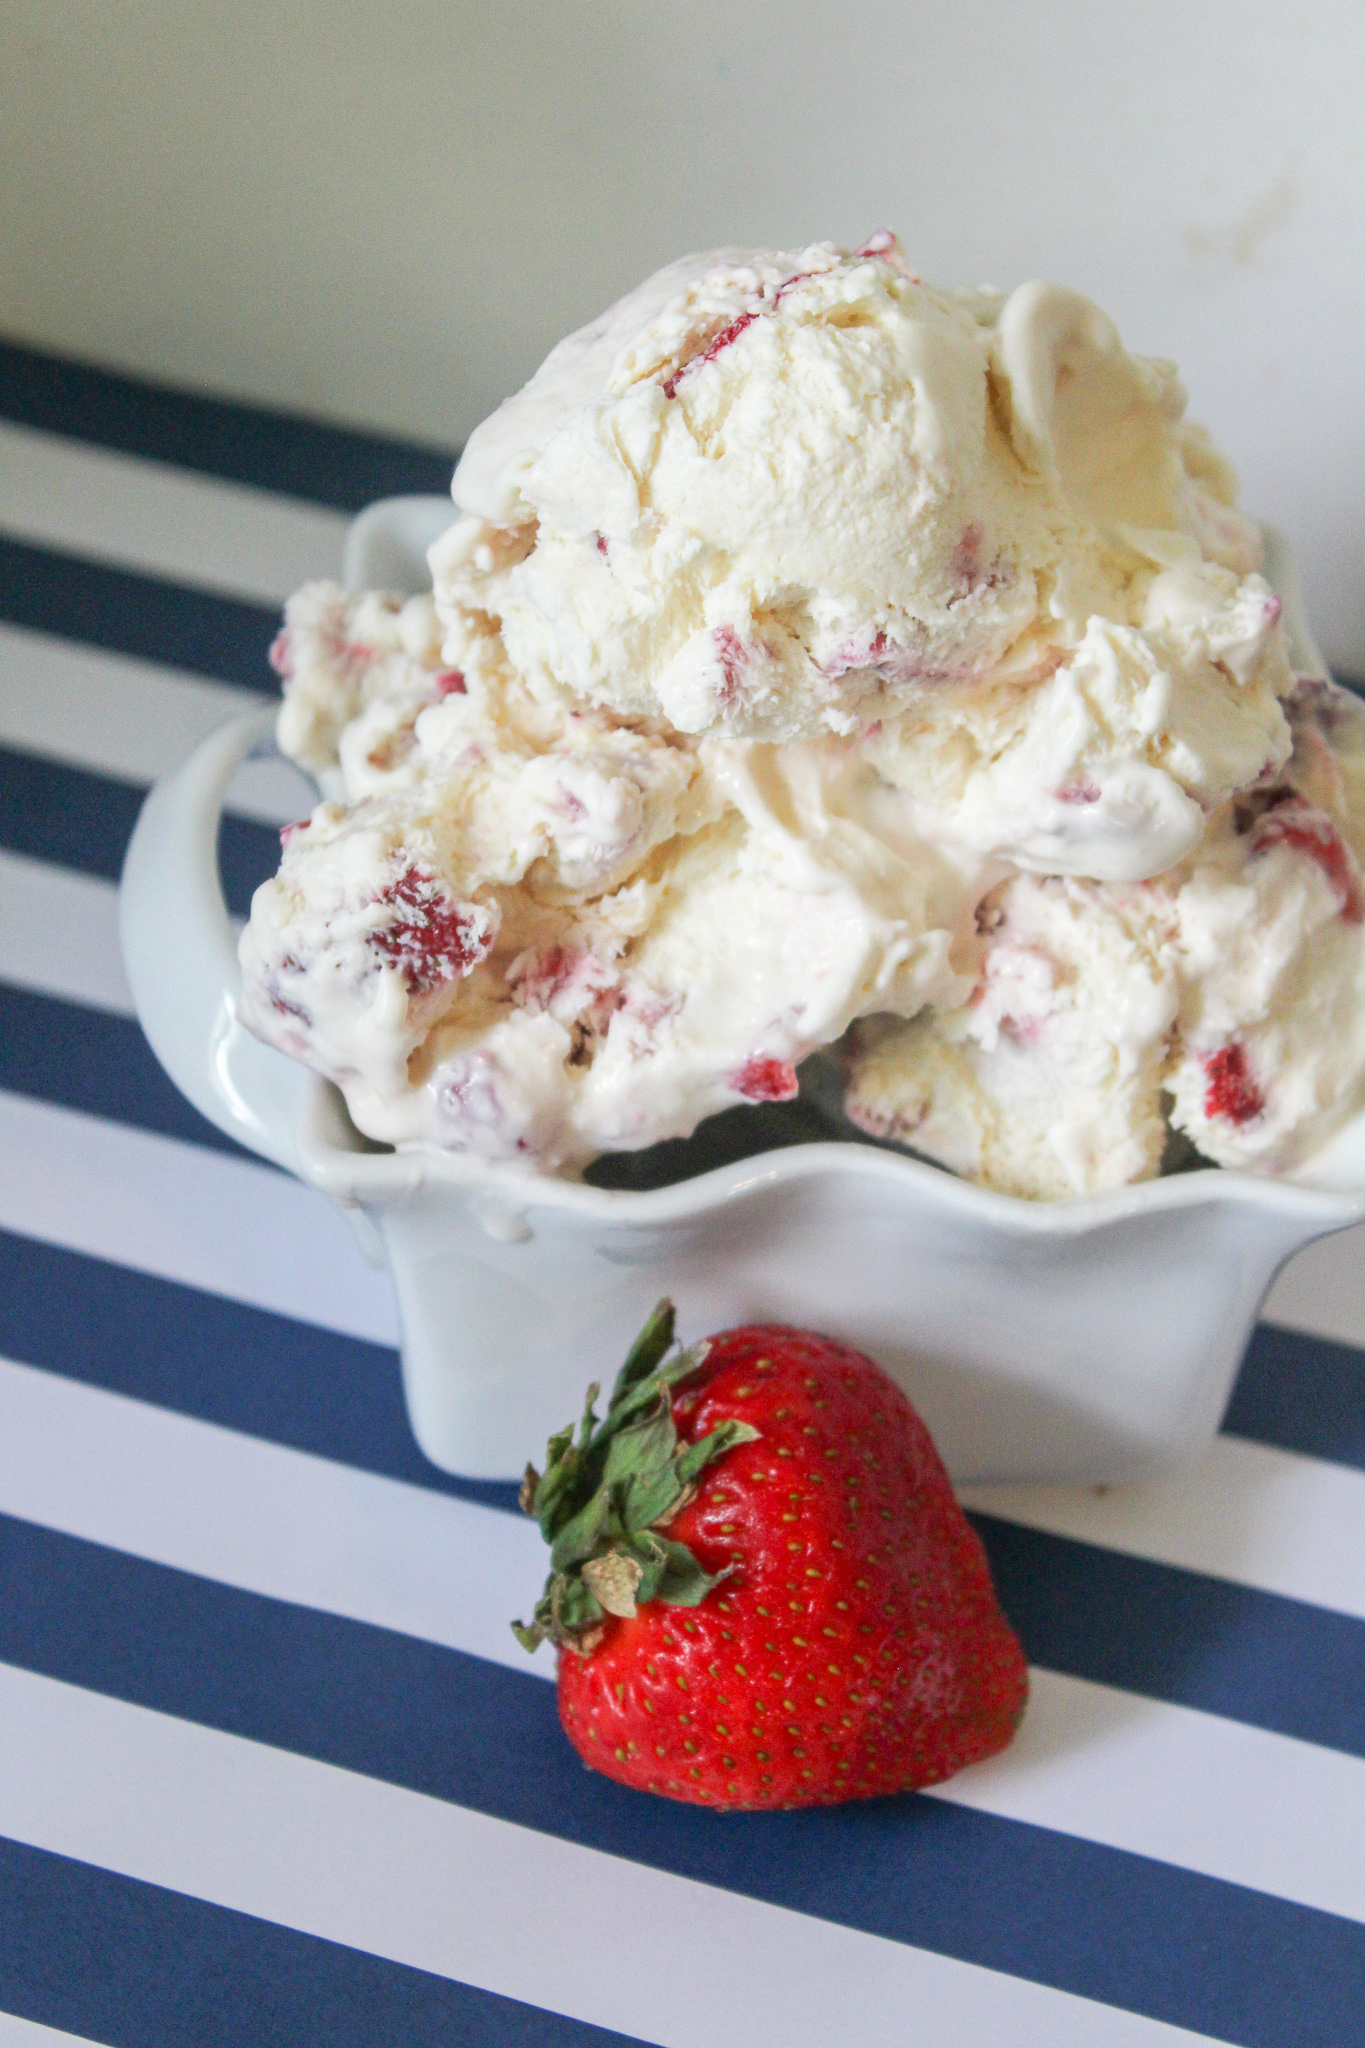 Strawberries and Cream Ice Cream